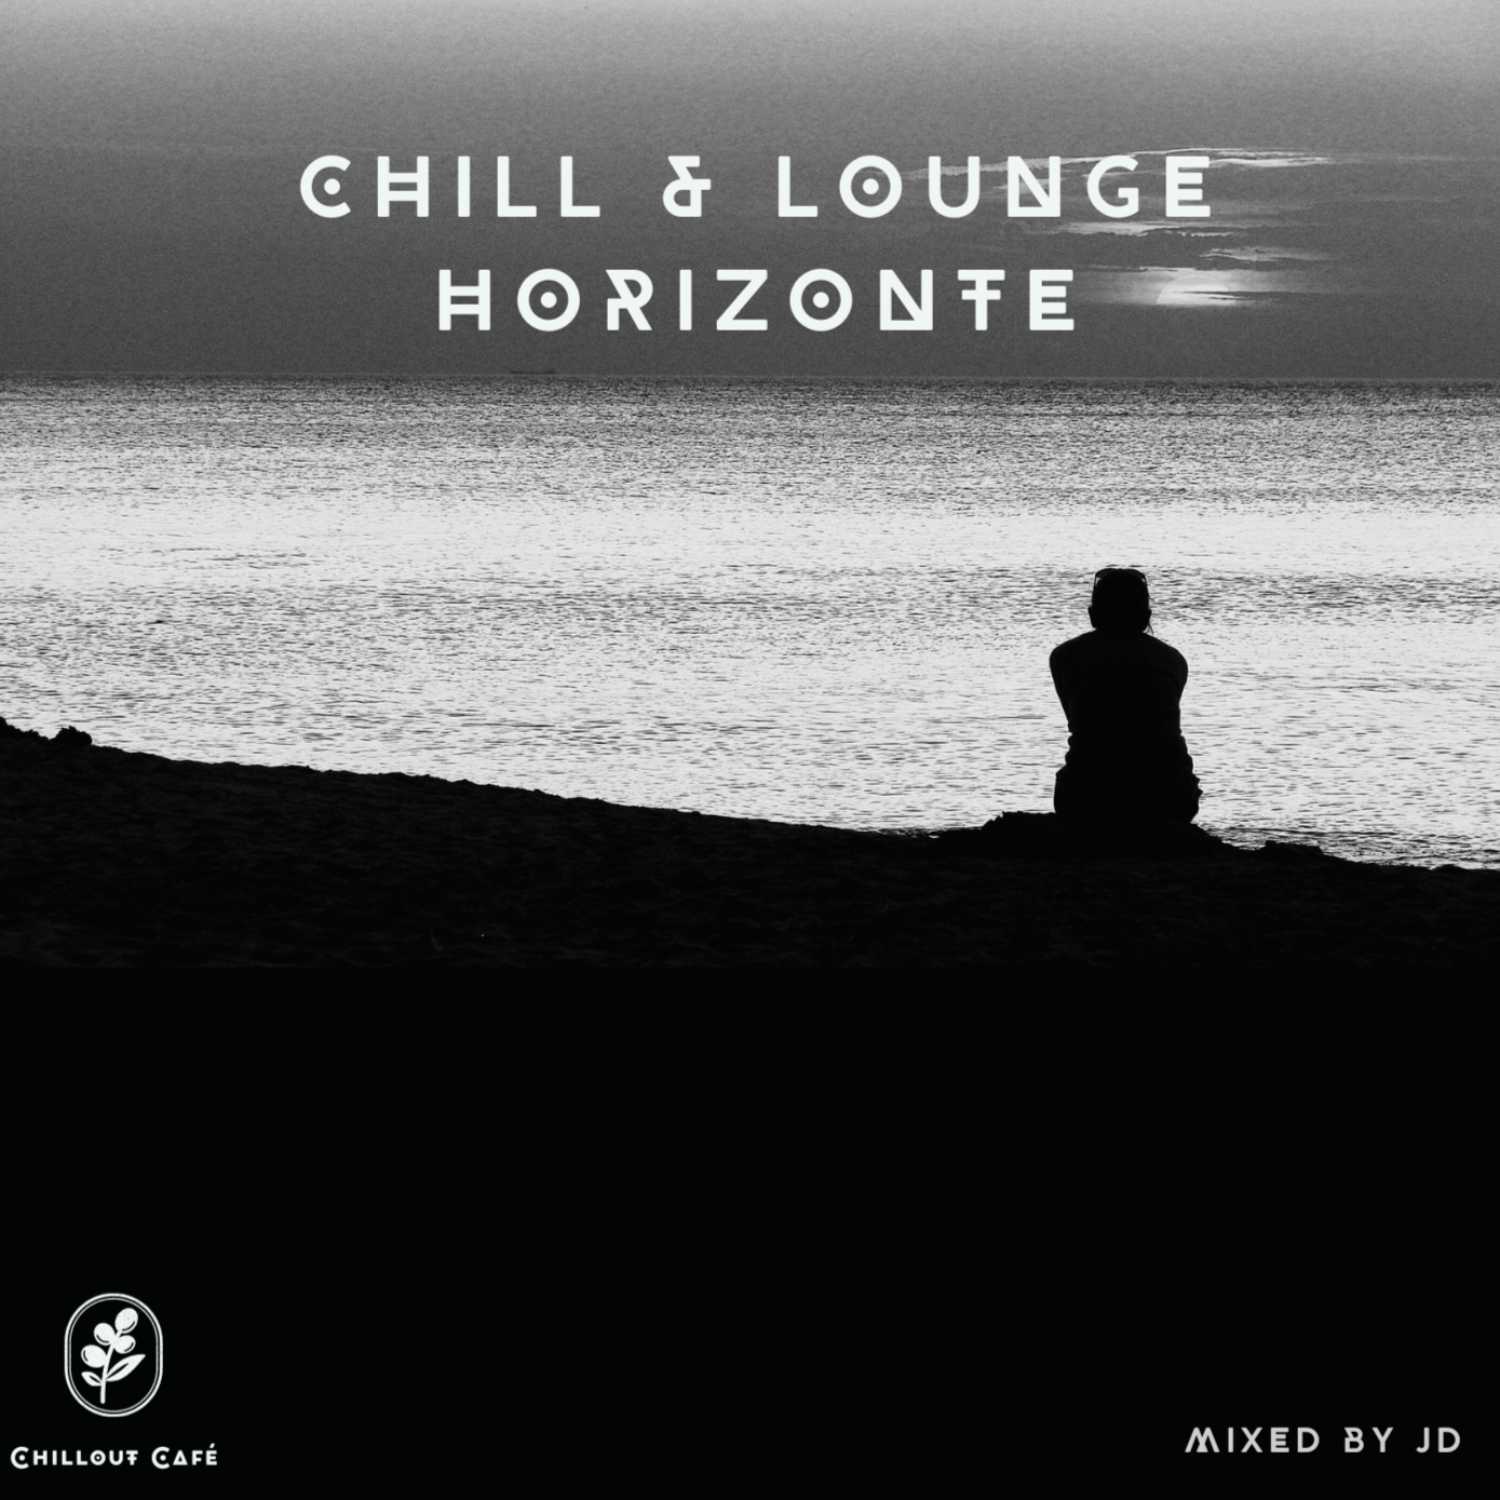 Chill & Lounge Horizonte